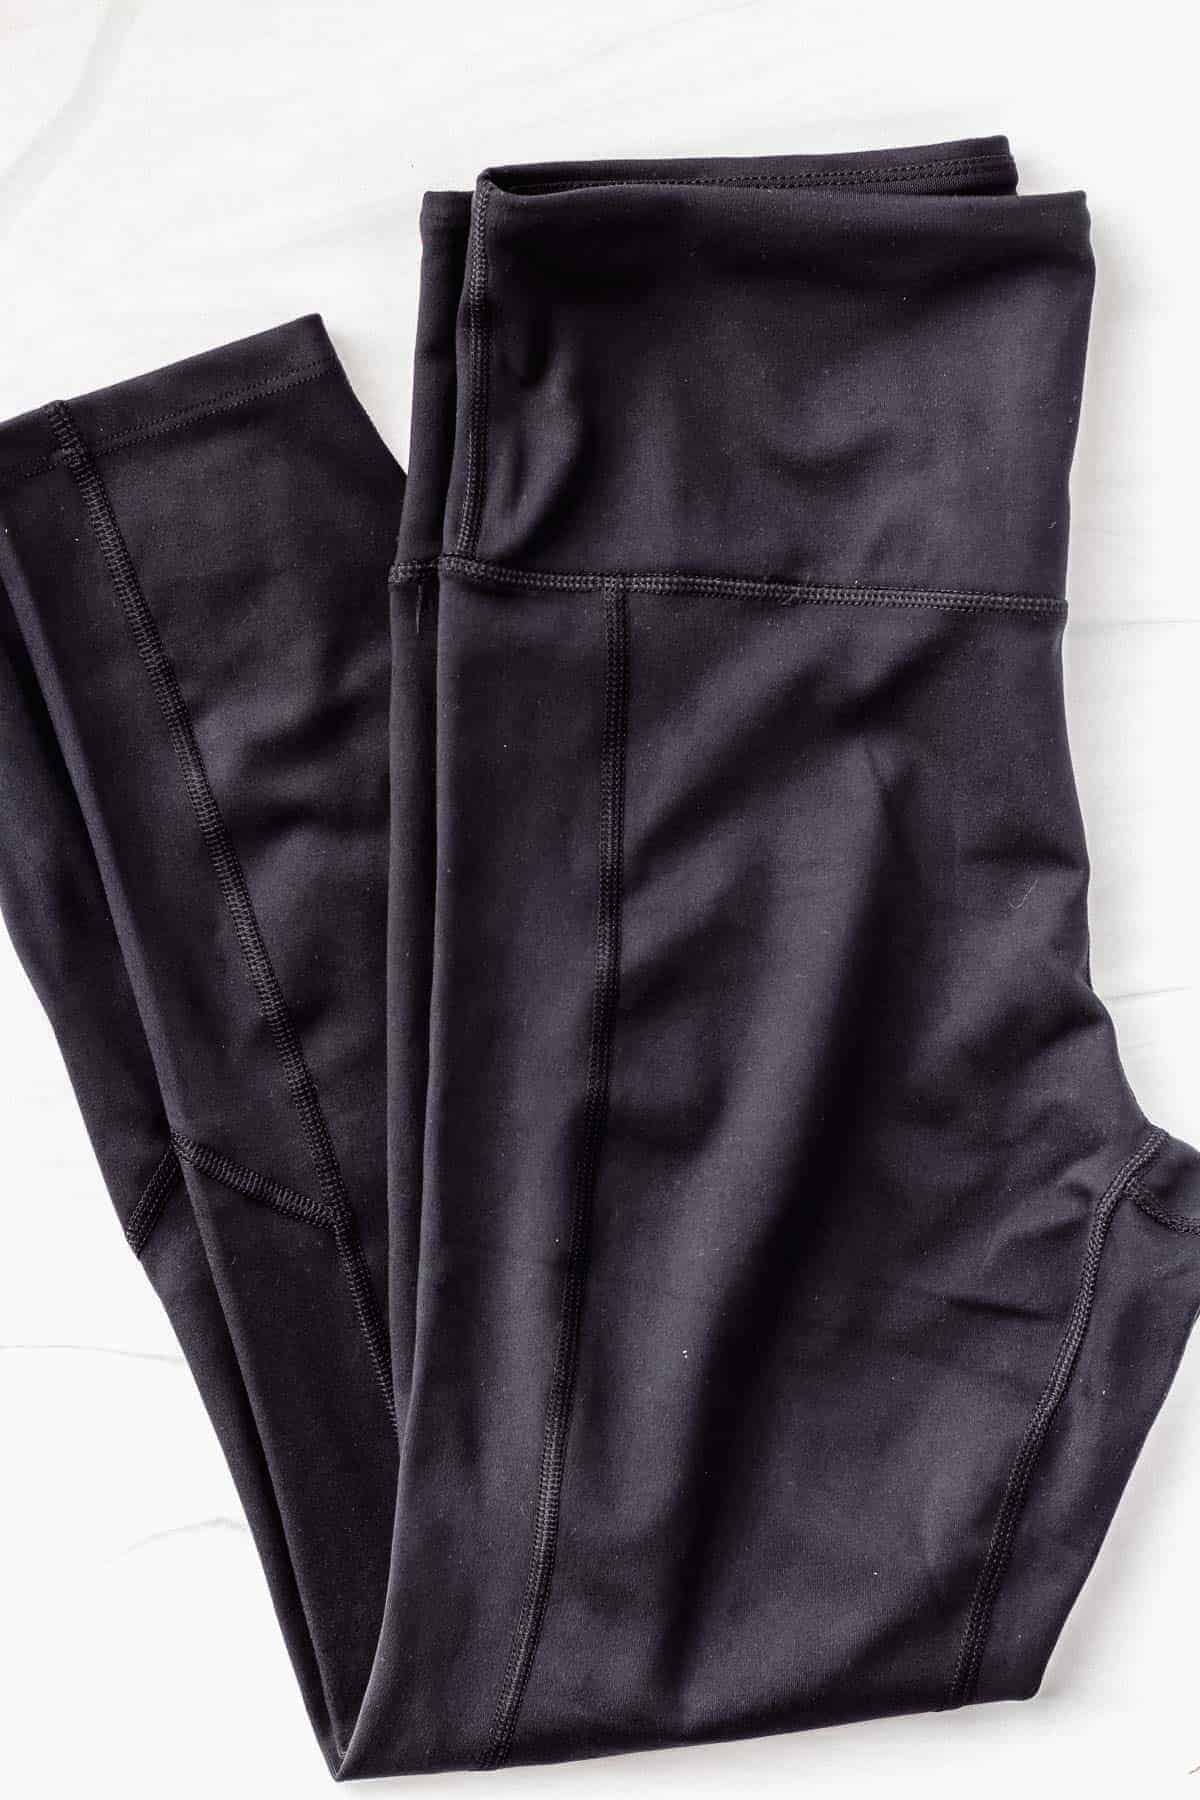 Marika Berlin tummy control leggings in black